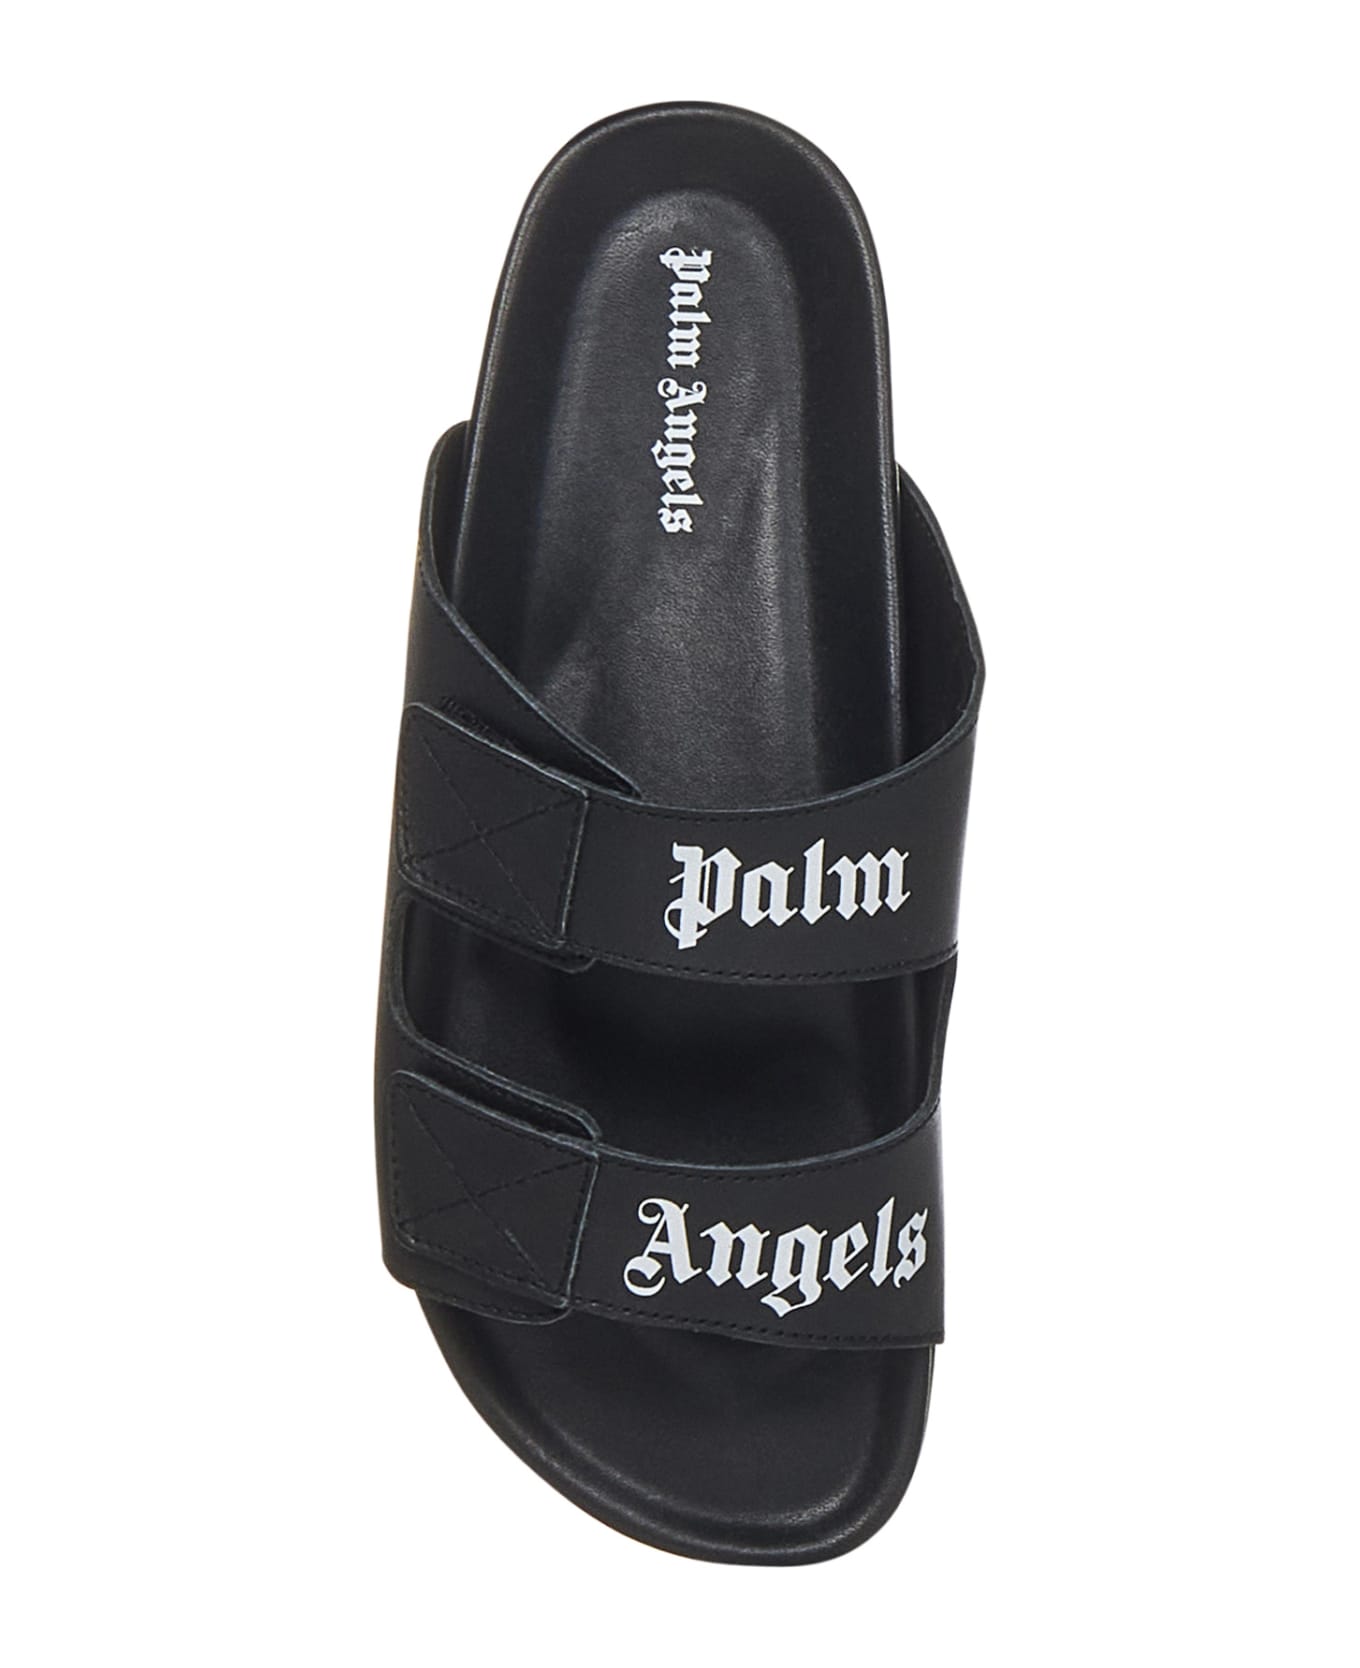 Palm Angels Leather Slippers - Black サンダル